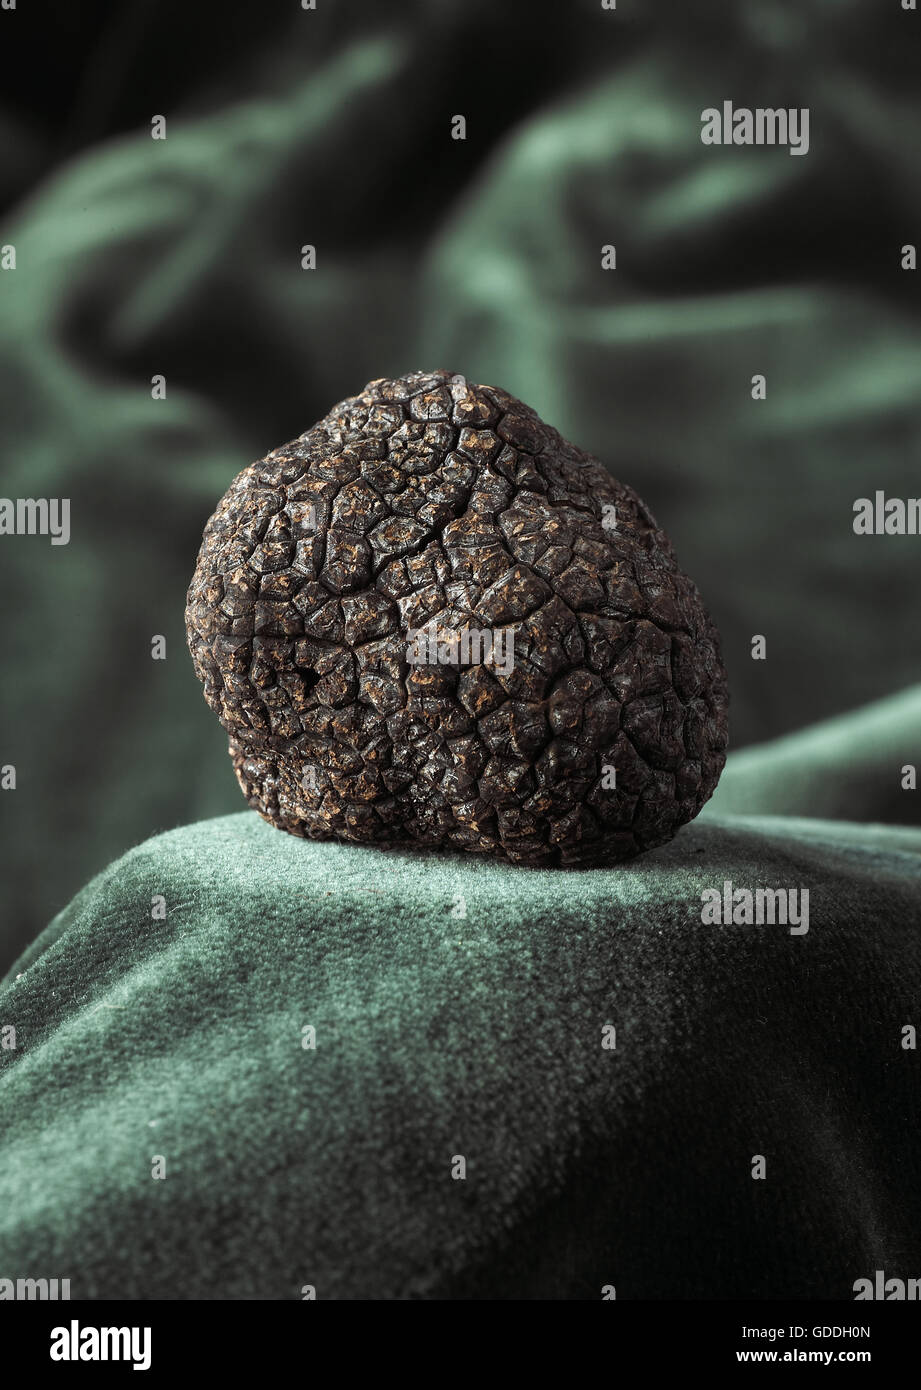 Brisures de truffes noires Tuber melanosporum - Truffes Richerenches